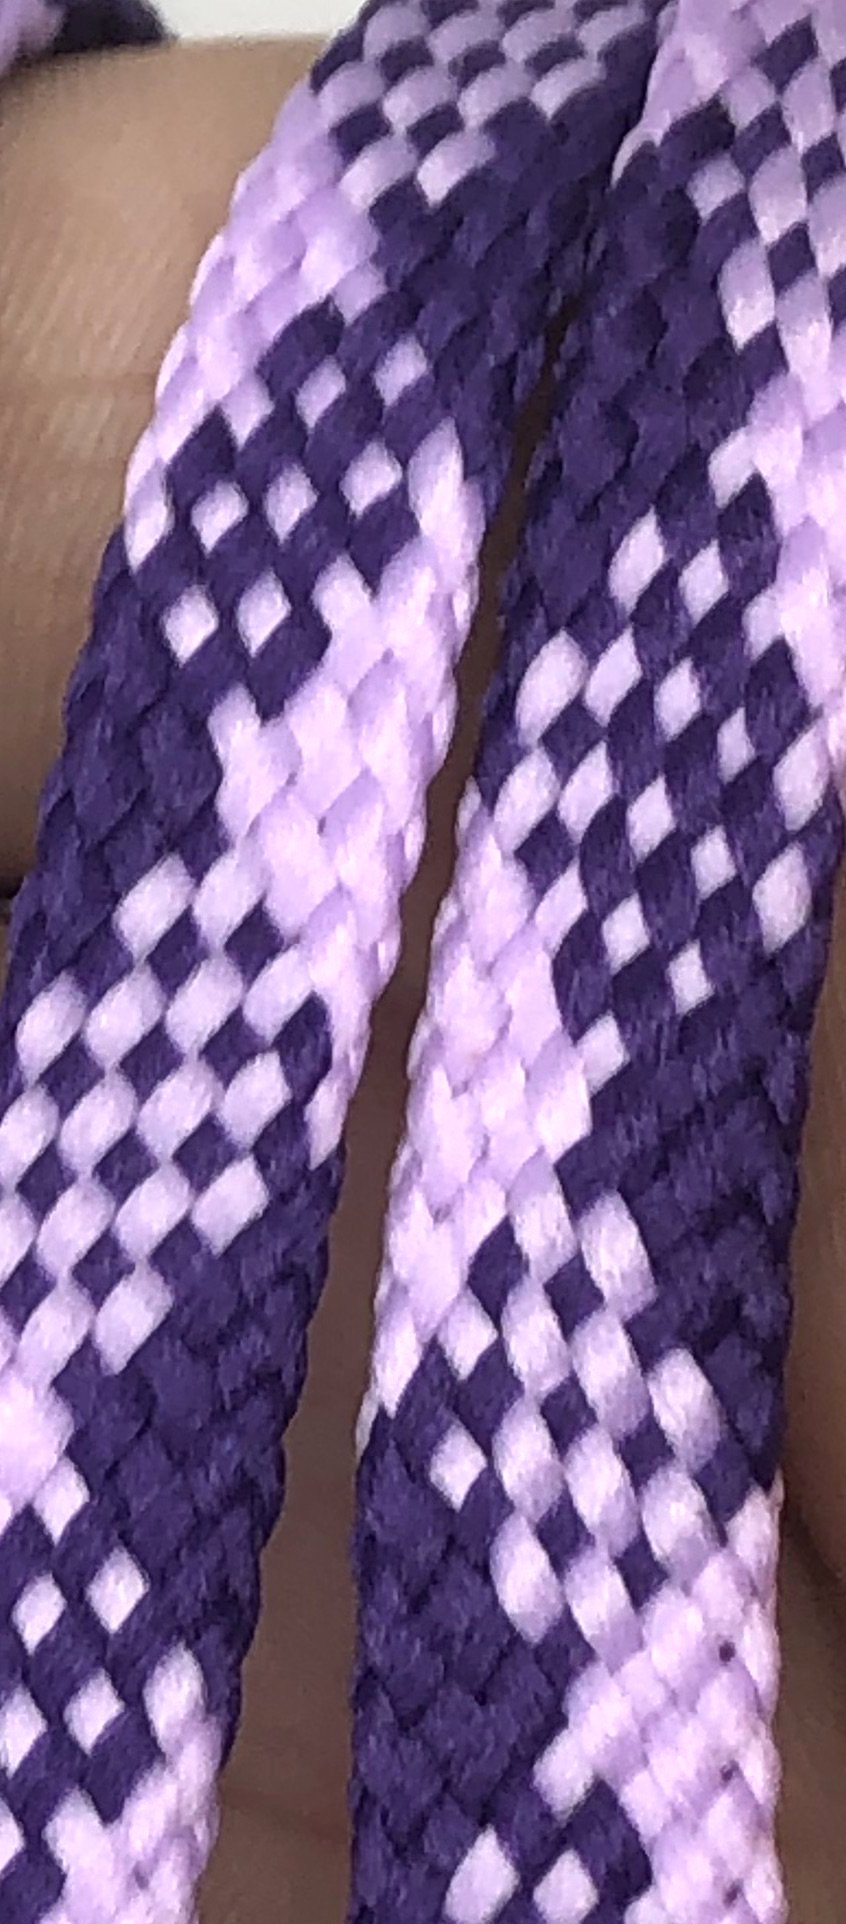 Flat Argyle Shoelaces - Purple and Lilac